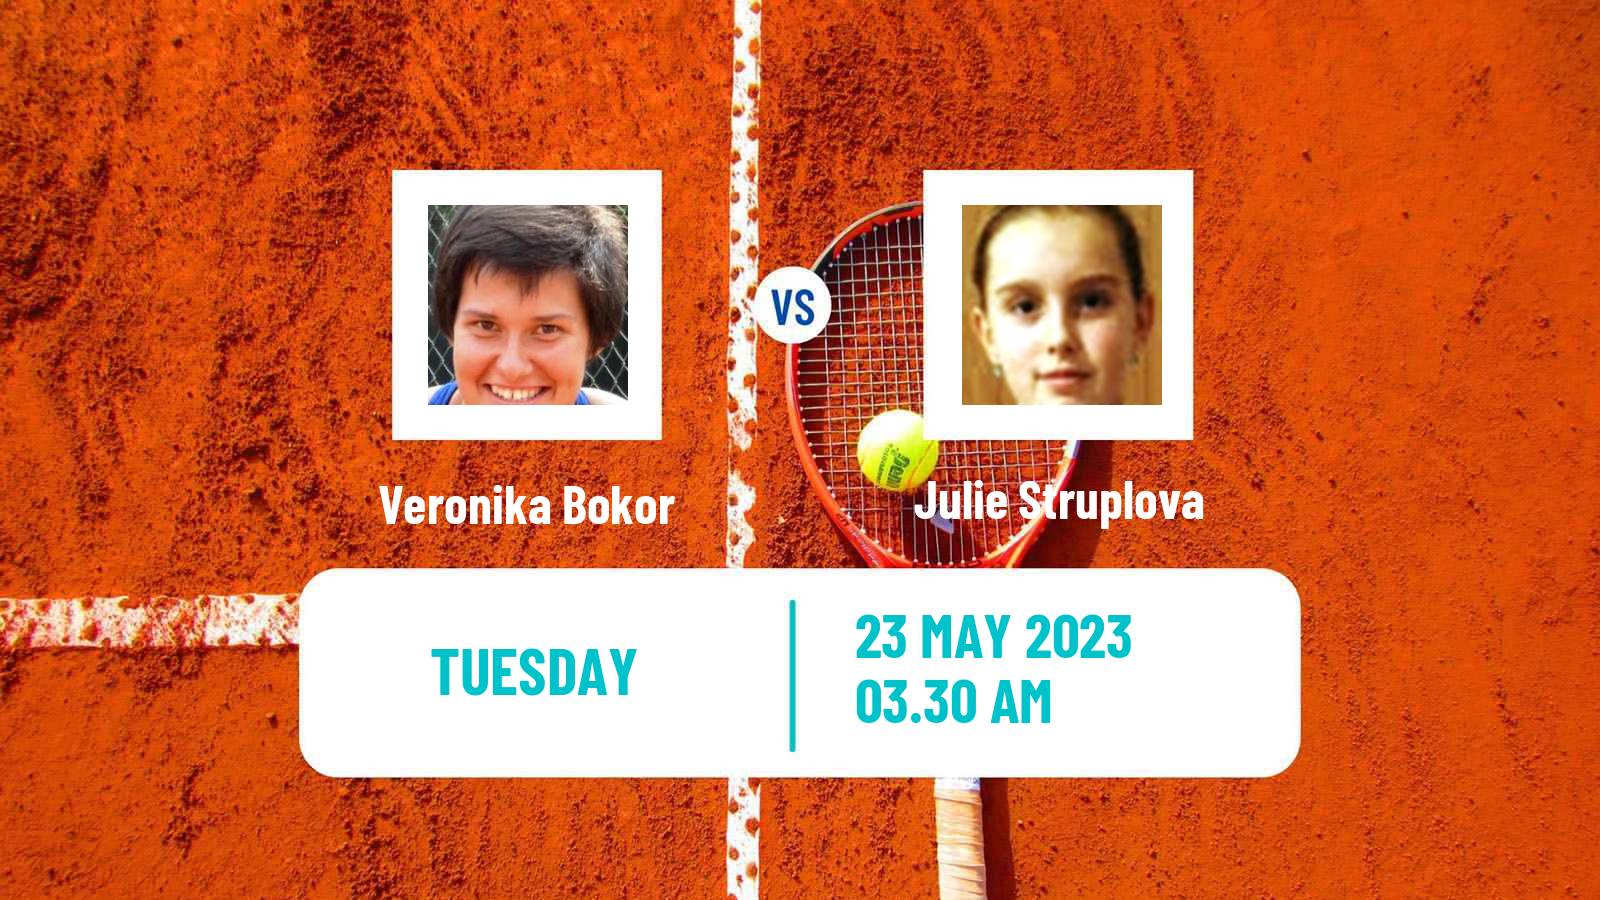 Tennis ITF W25 Warmbad Villach Women Veronika Bokor - Julie Struplova